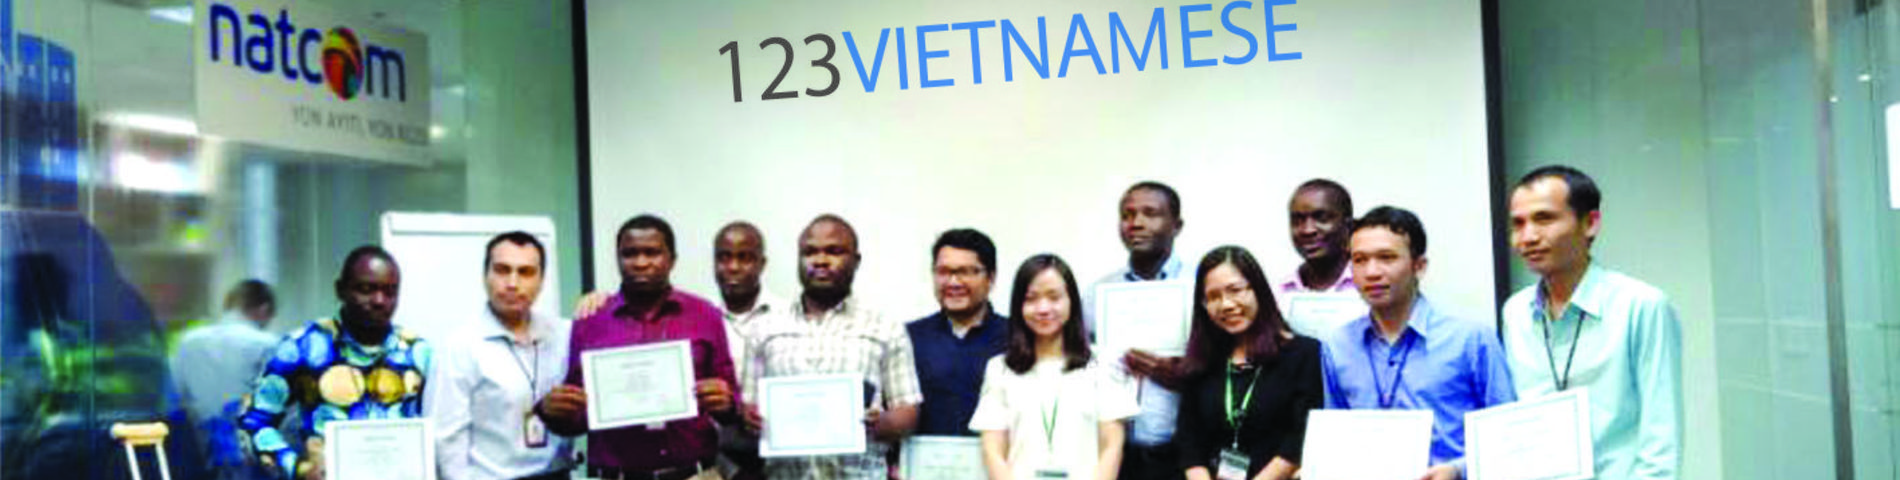 123 Vietnamese Center resim 1